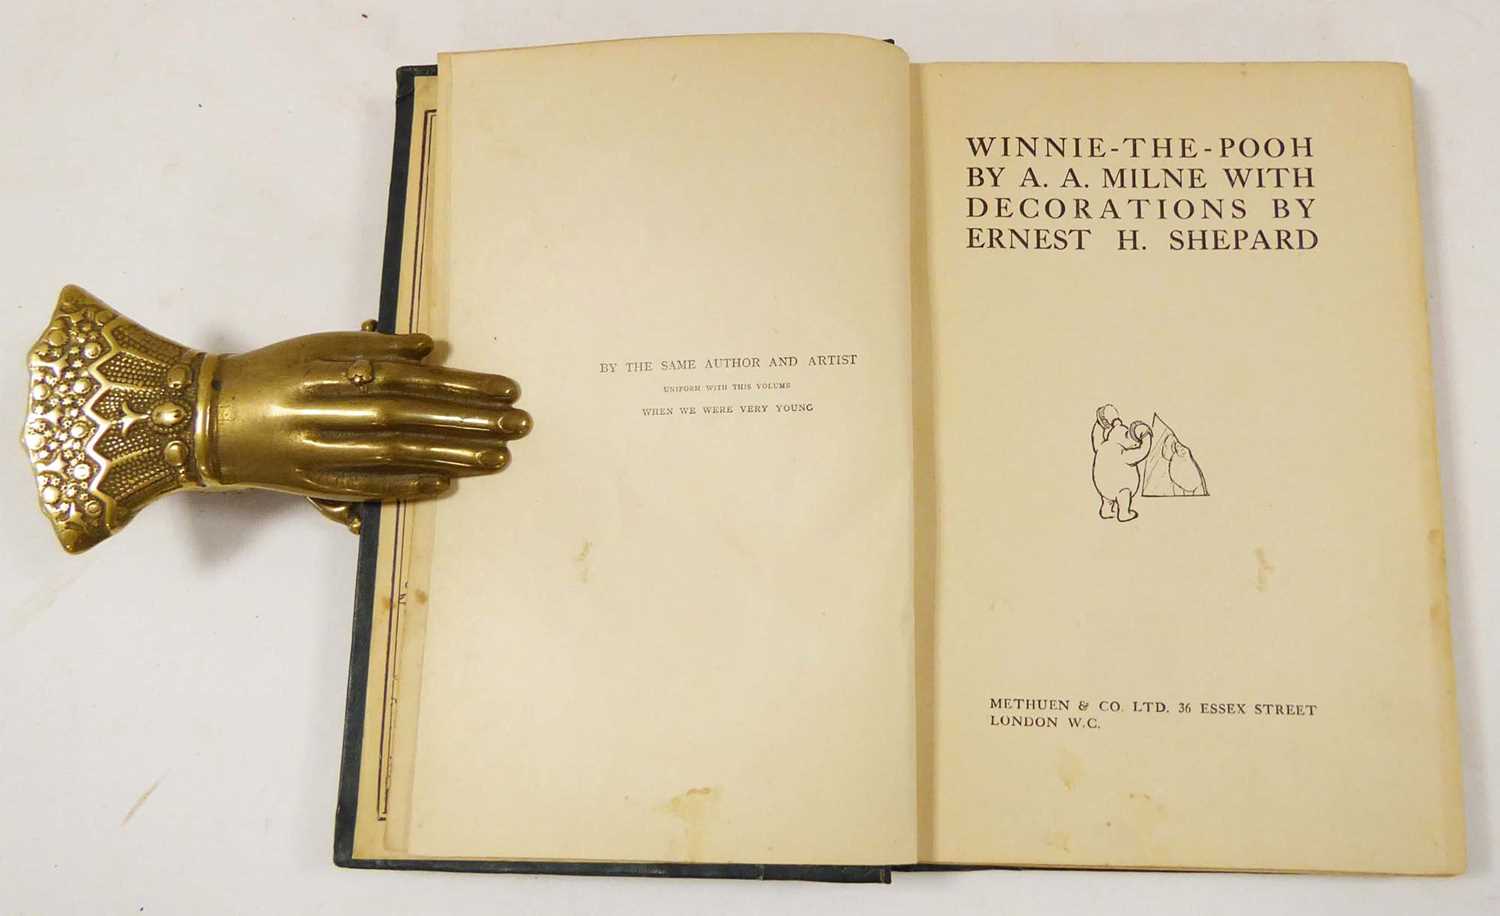 Alan Alexander Milne & Ernest Shepard : Winnie the Pooh, 1926. 1st. Edition. Original green cloth